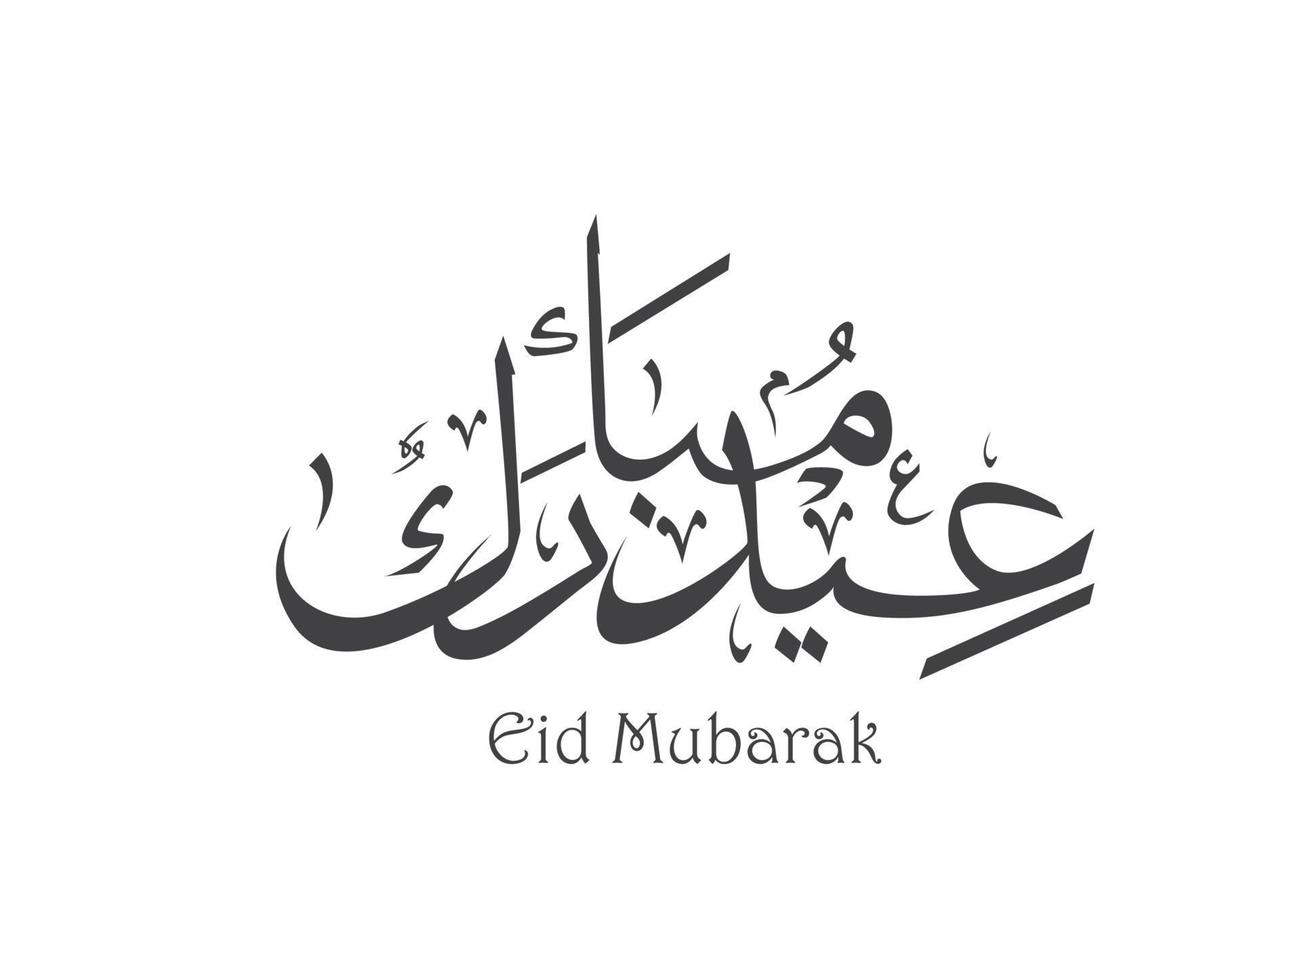 eid gioia eid mubarak biglietto di auguri in calligrafia araba calligrafia islamica significa felice eid vettore